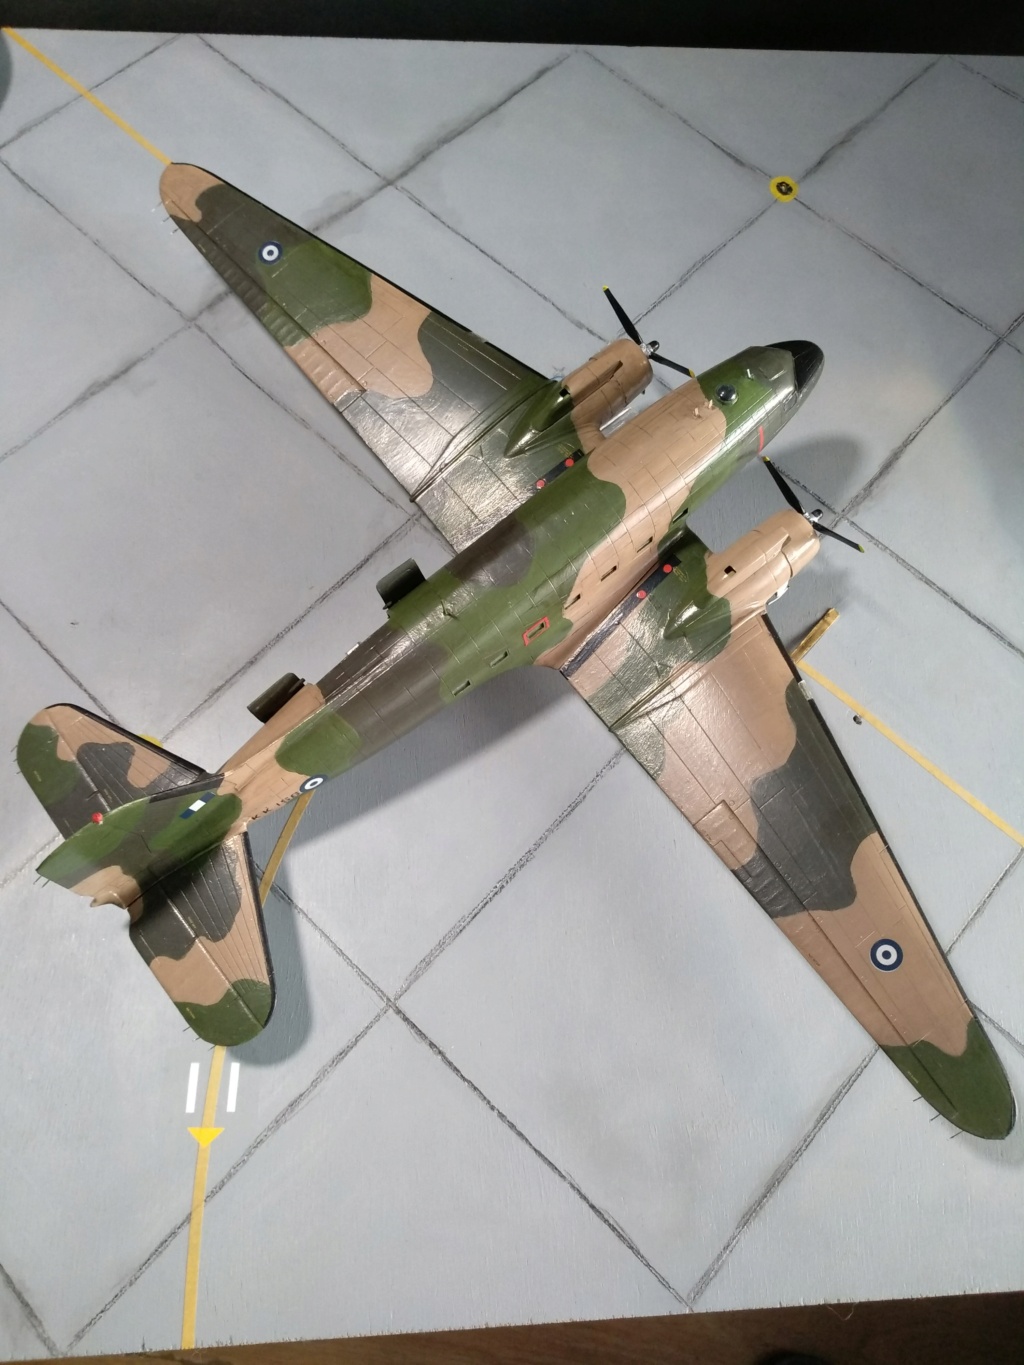   [Italeri] C-47 Skytrain 1/72. Armee de l'Air Grecque. (s/n KK 156) Img_2073